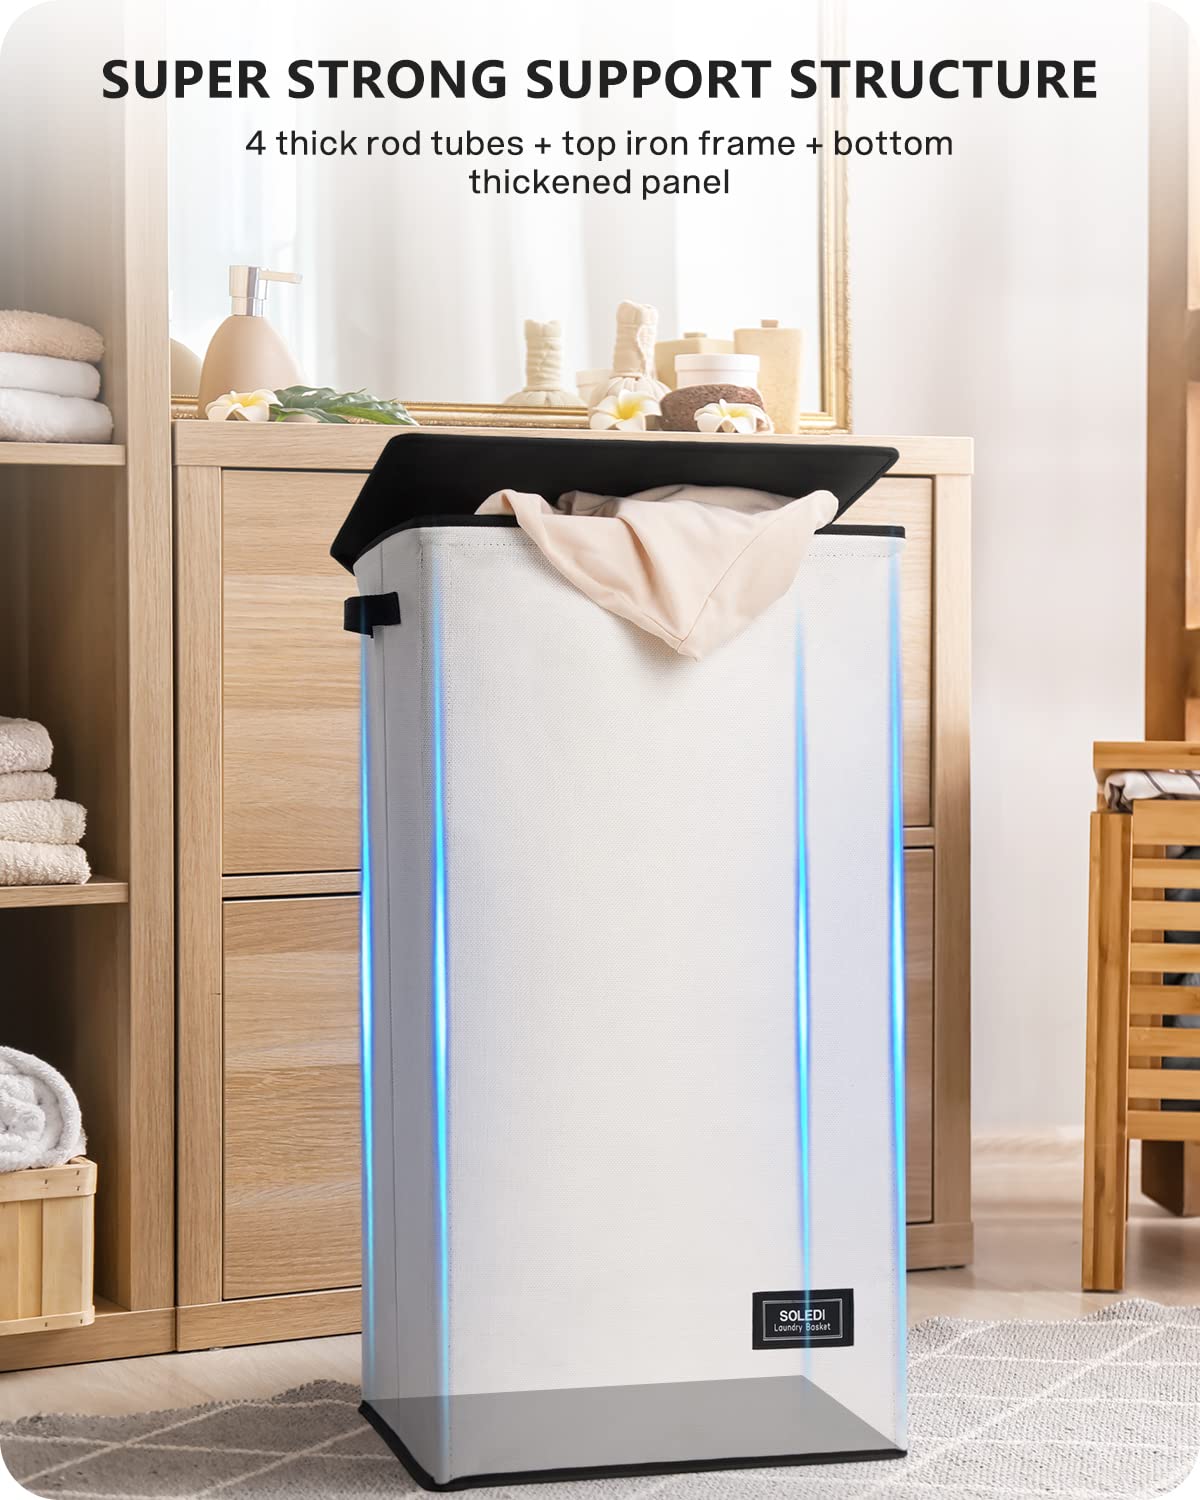 SOLEDI Laundry Hamper with Lid - 100L XL (White)